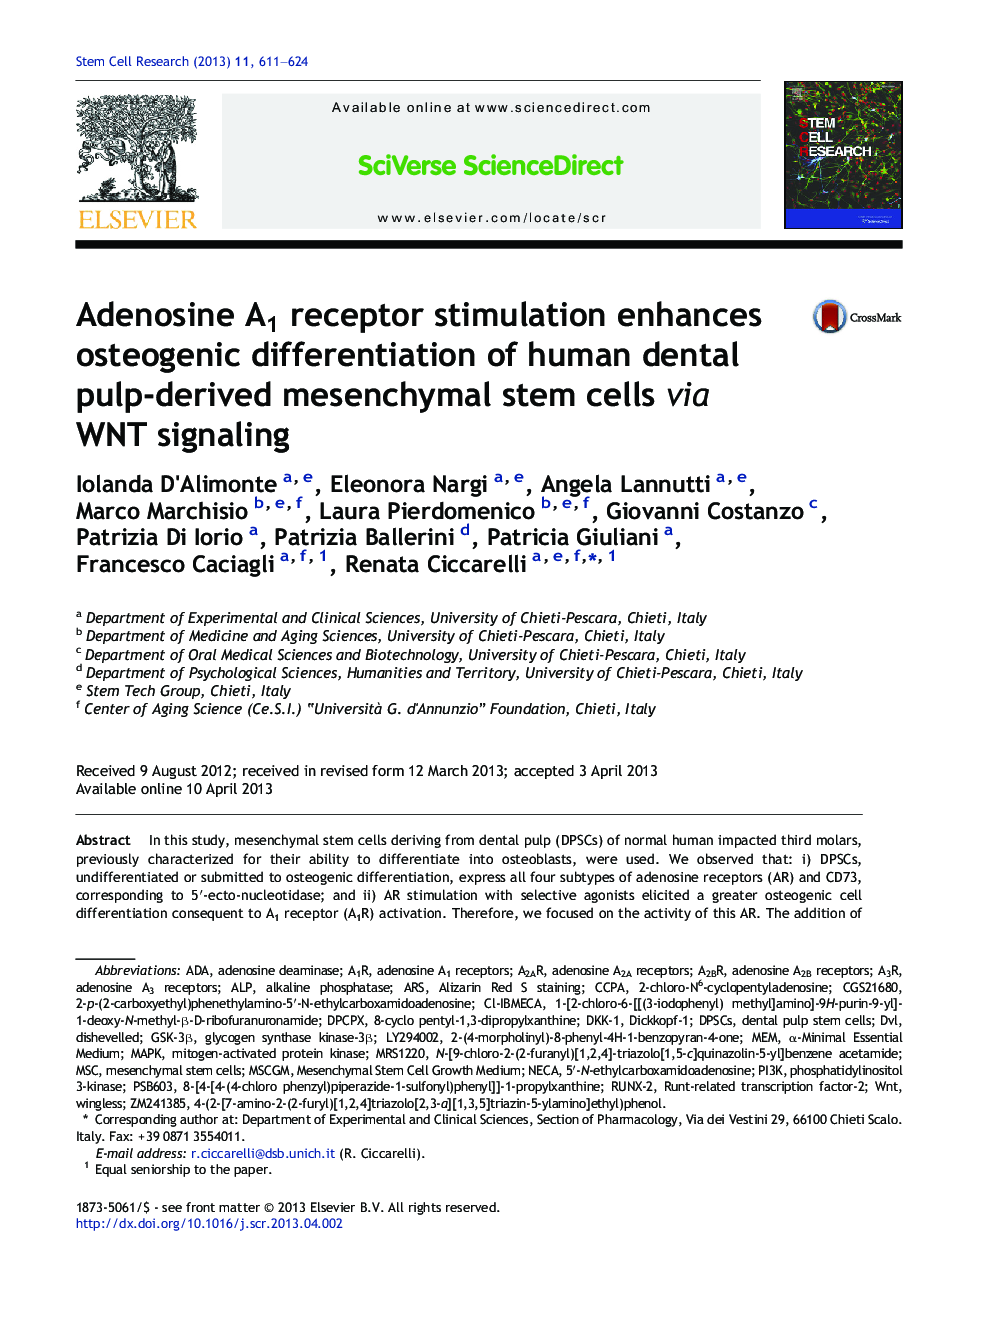 Adenosine A1 receptor stimulation enhances osteogenic differentiation of human dental pulp-derived mesenchymal stem cells via WNT signaling